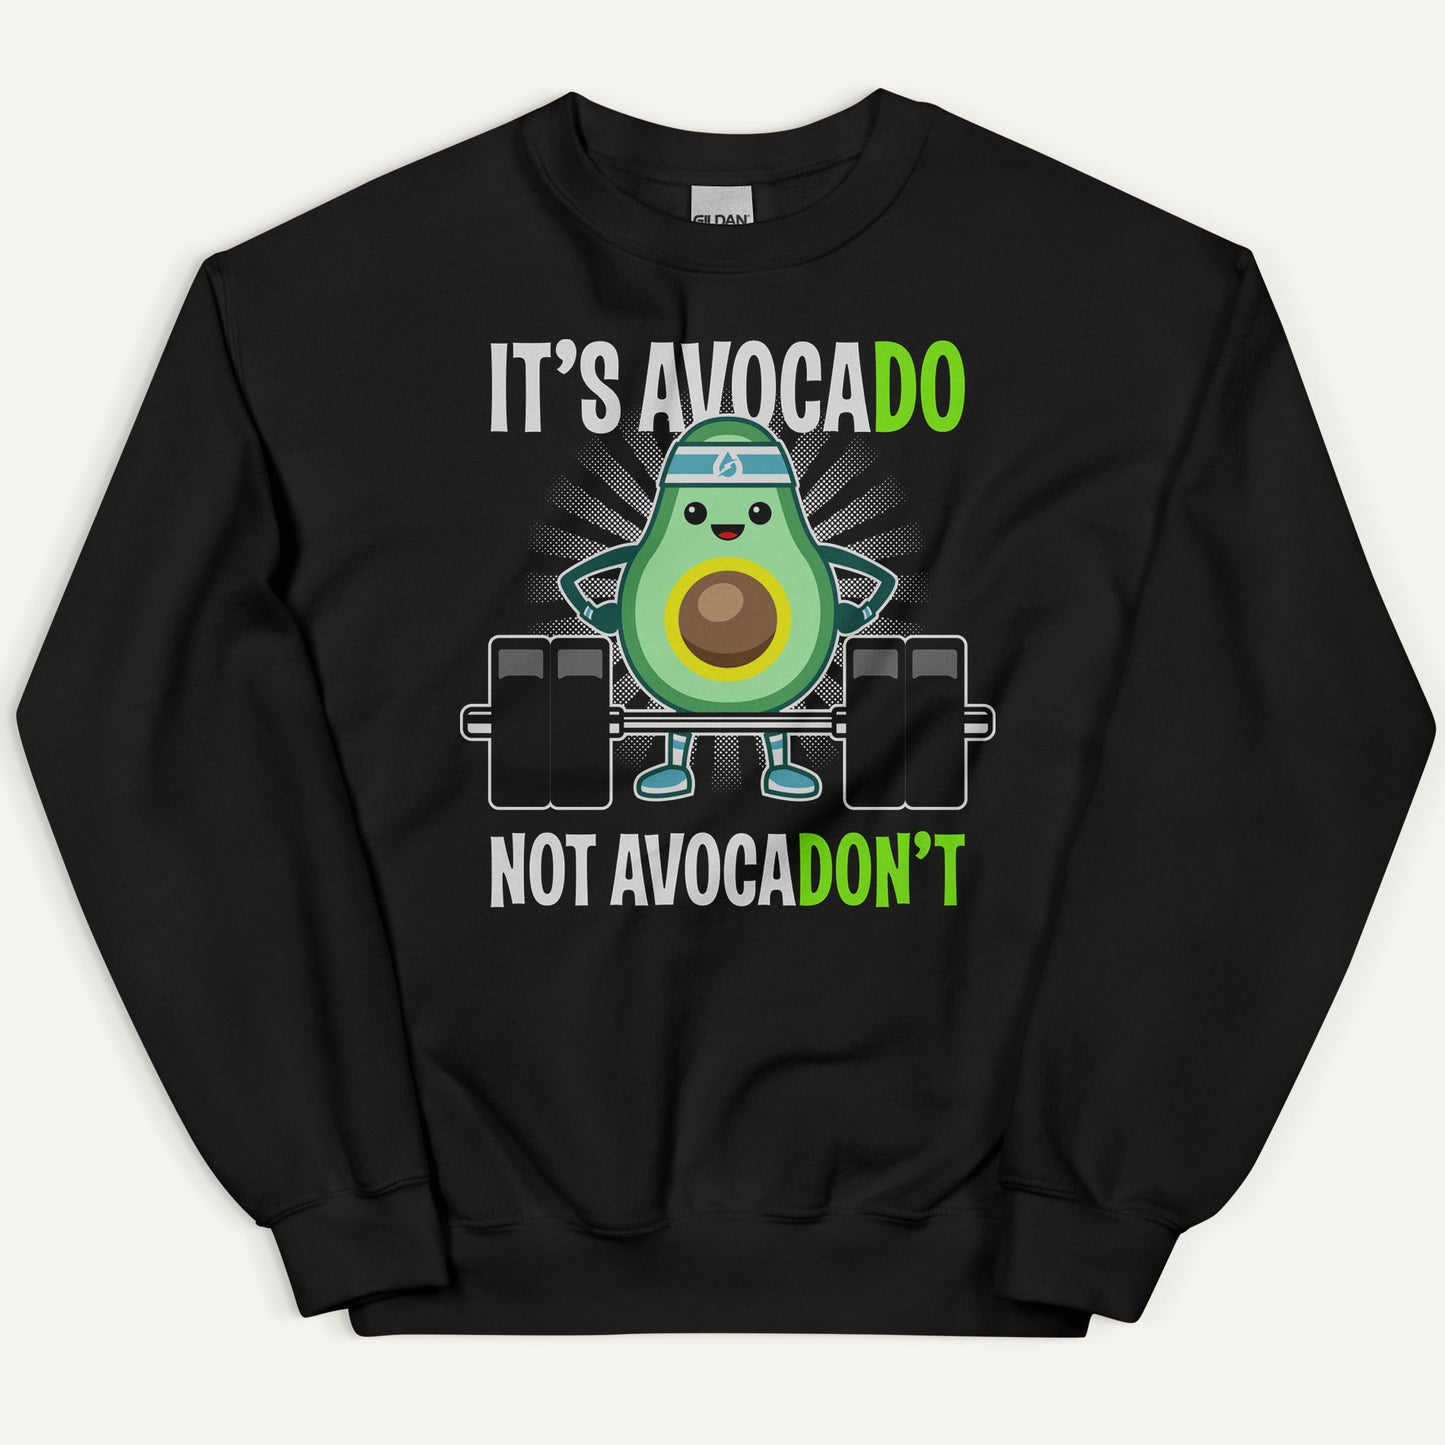 It's Avocado Not Avocadon't Sweatshirt